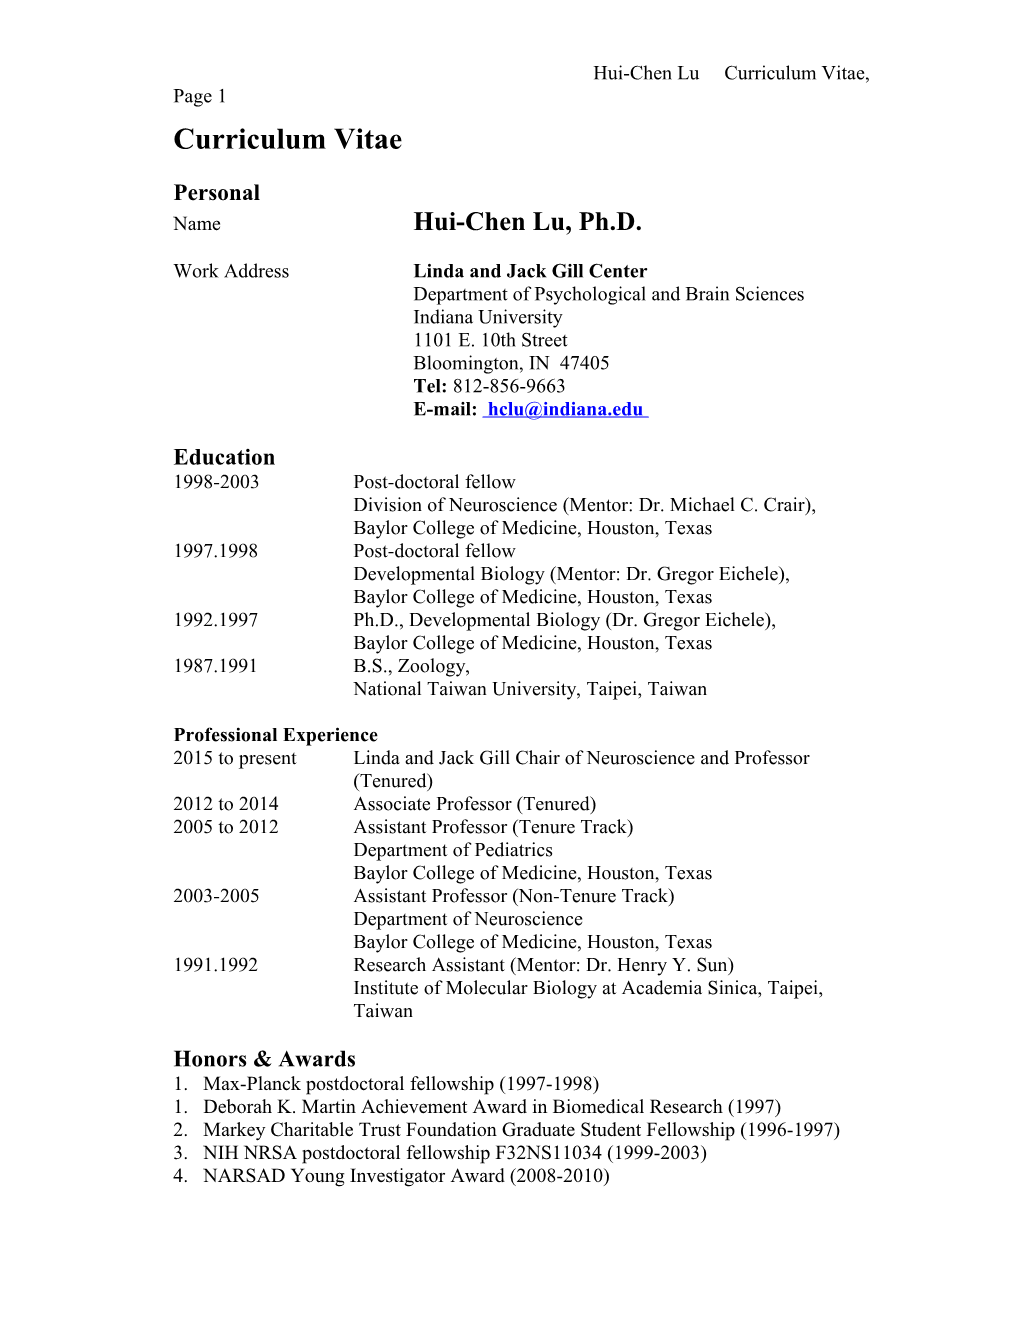 Hui-Chen Lu Curriculum Vitae, Page 1